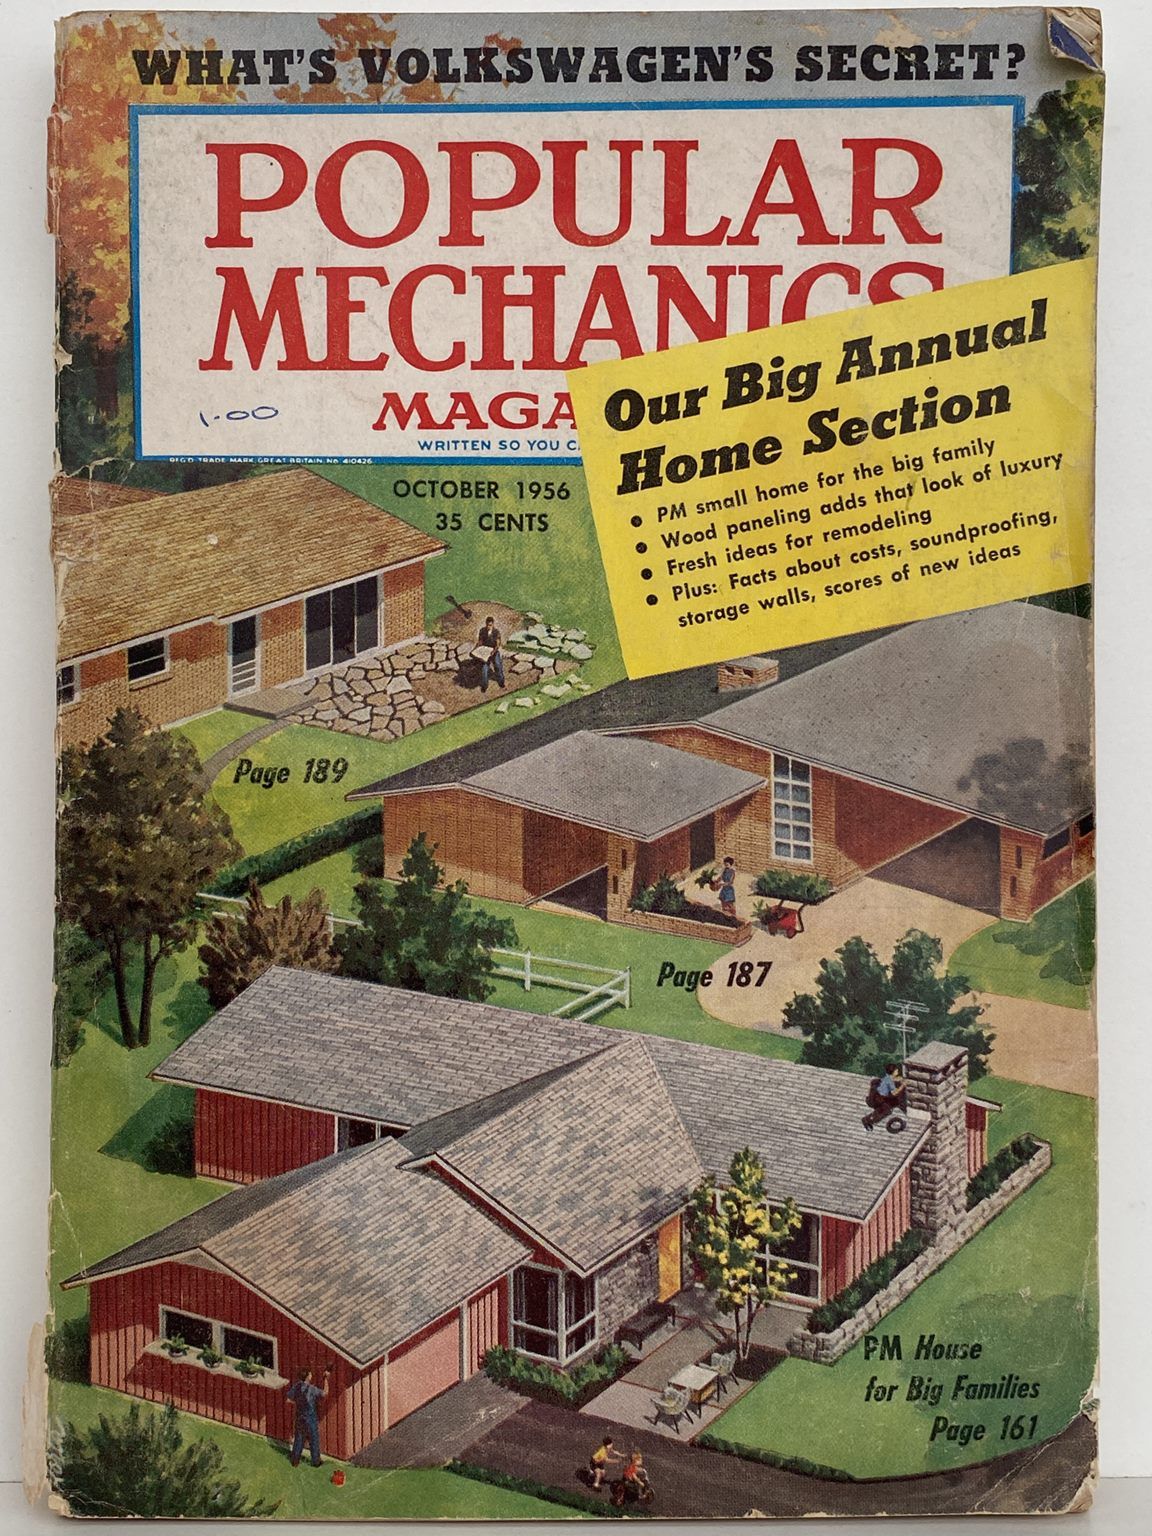 VINTAGE MAGAZINE: Popular Mechanics - Vol. 106, No. 4 - October 1956